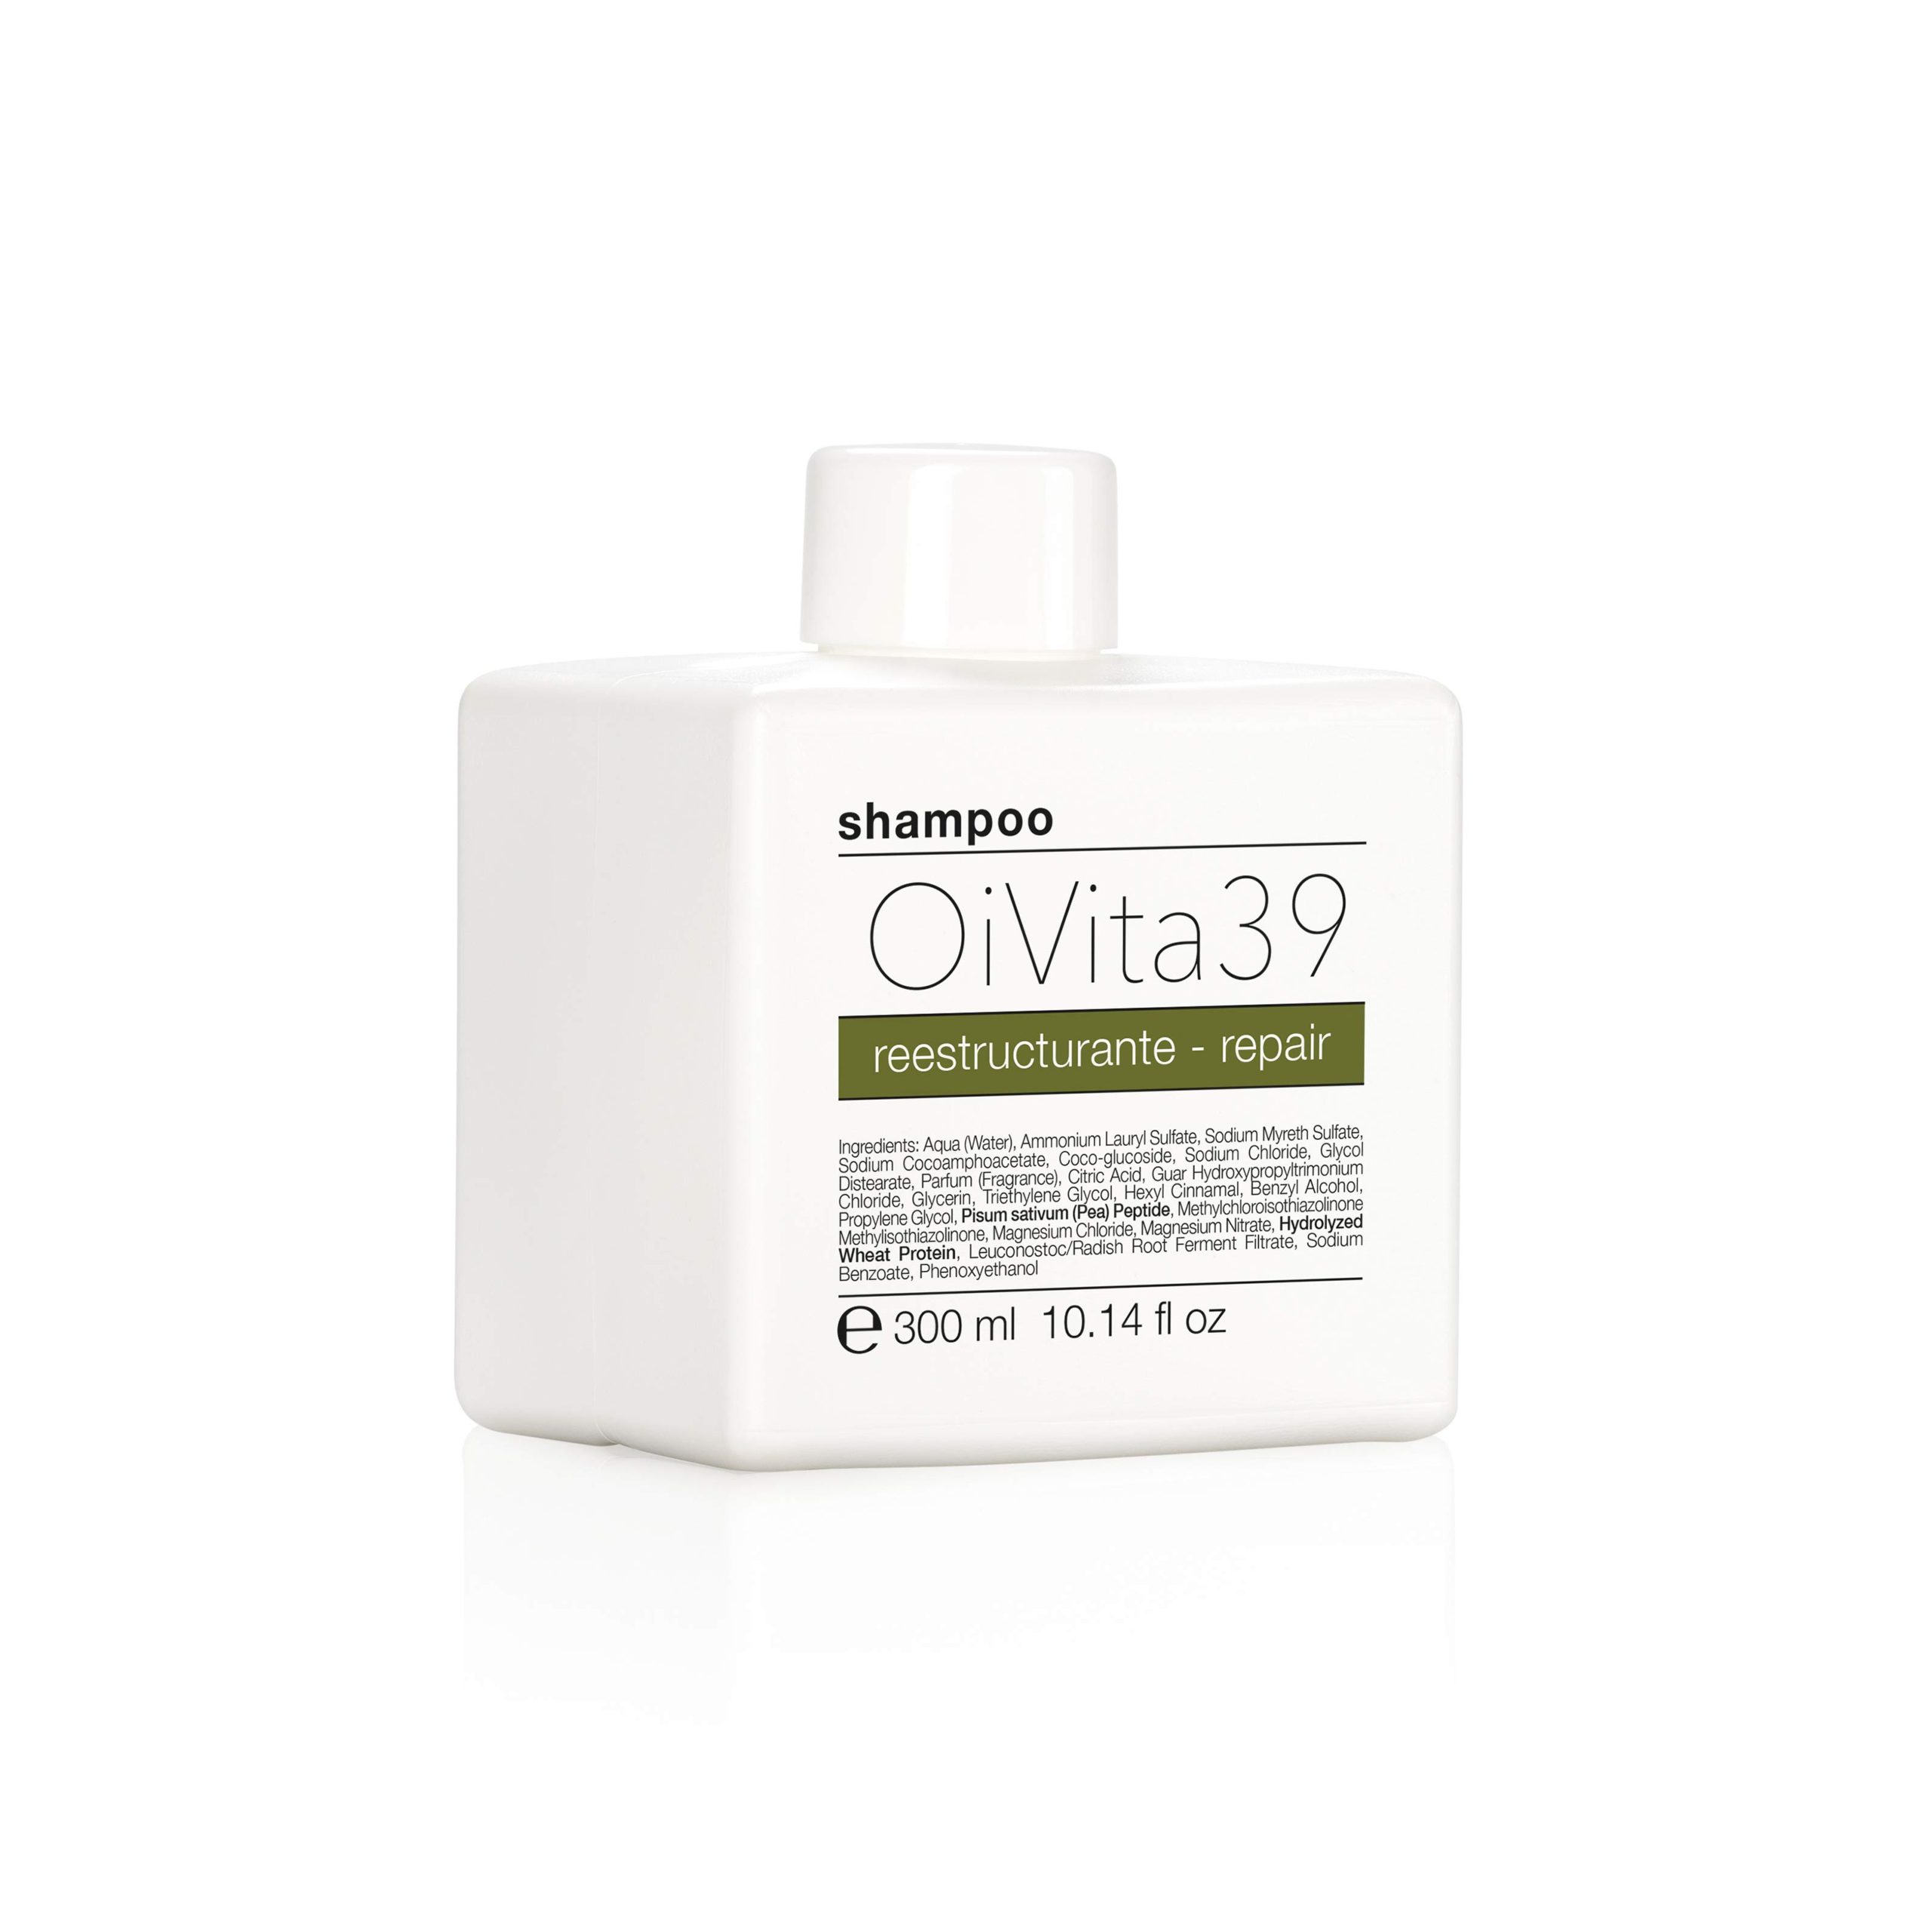 shampoo-repair-200ml-oivita39-www.oivita39.com